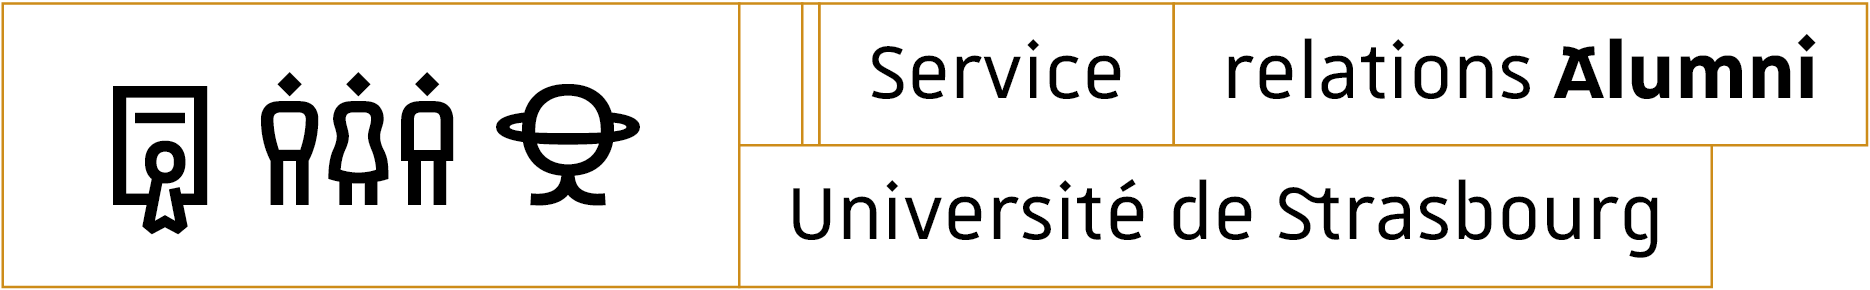 Alumni - Université de Strasbourg